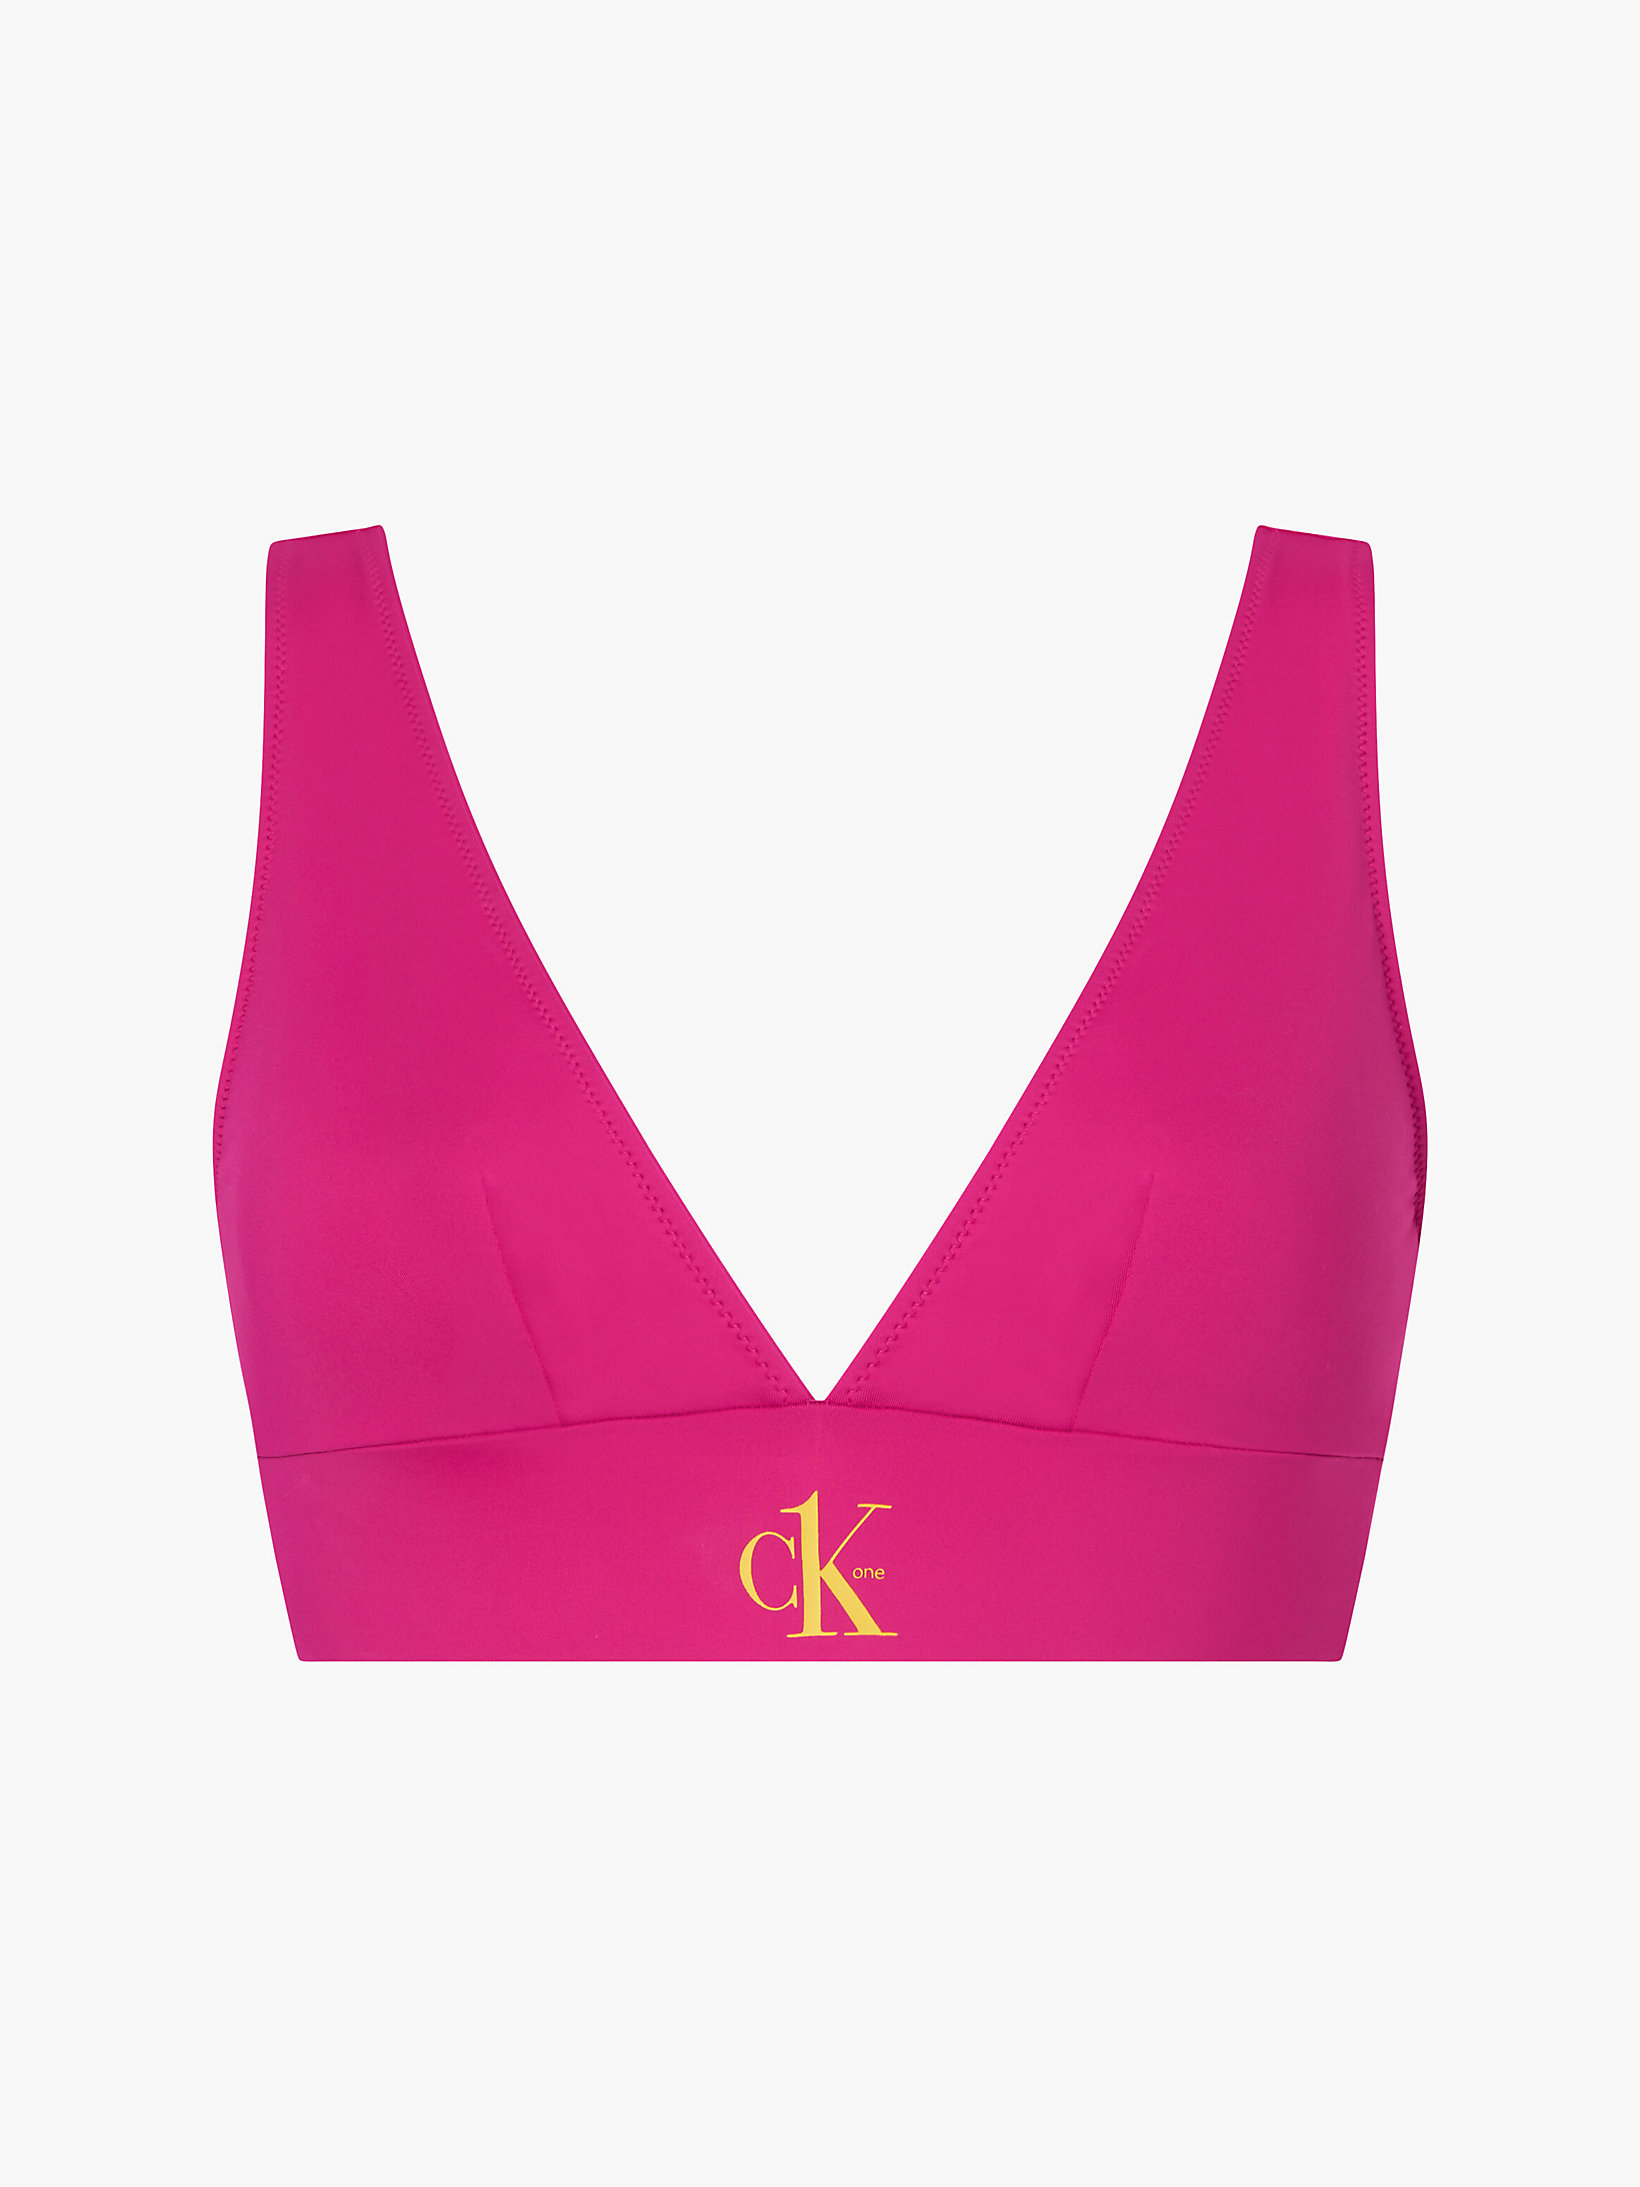 Royal Pink Bralette Bikini Top - CK One undefined women Calvin Klein